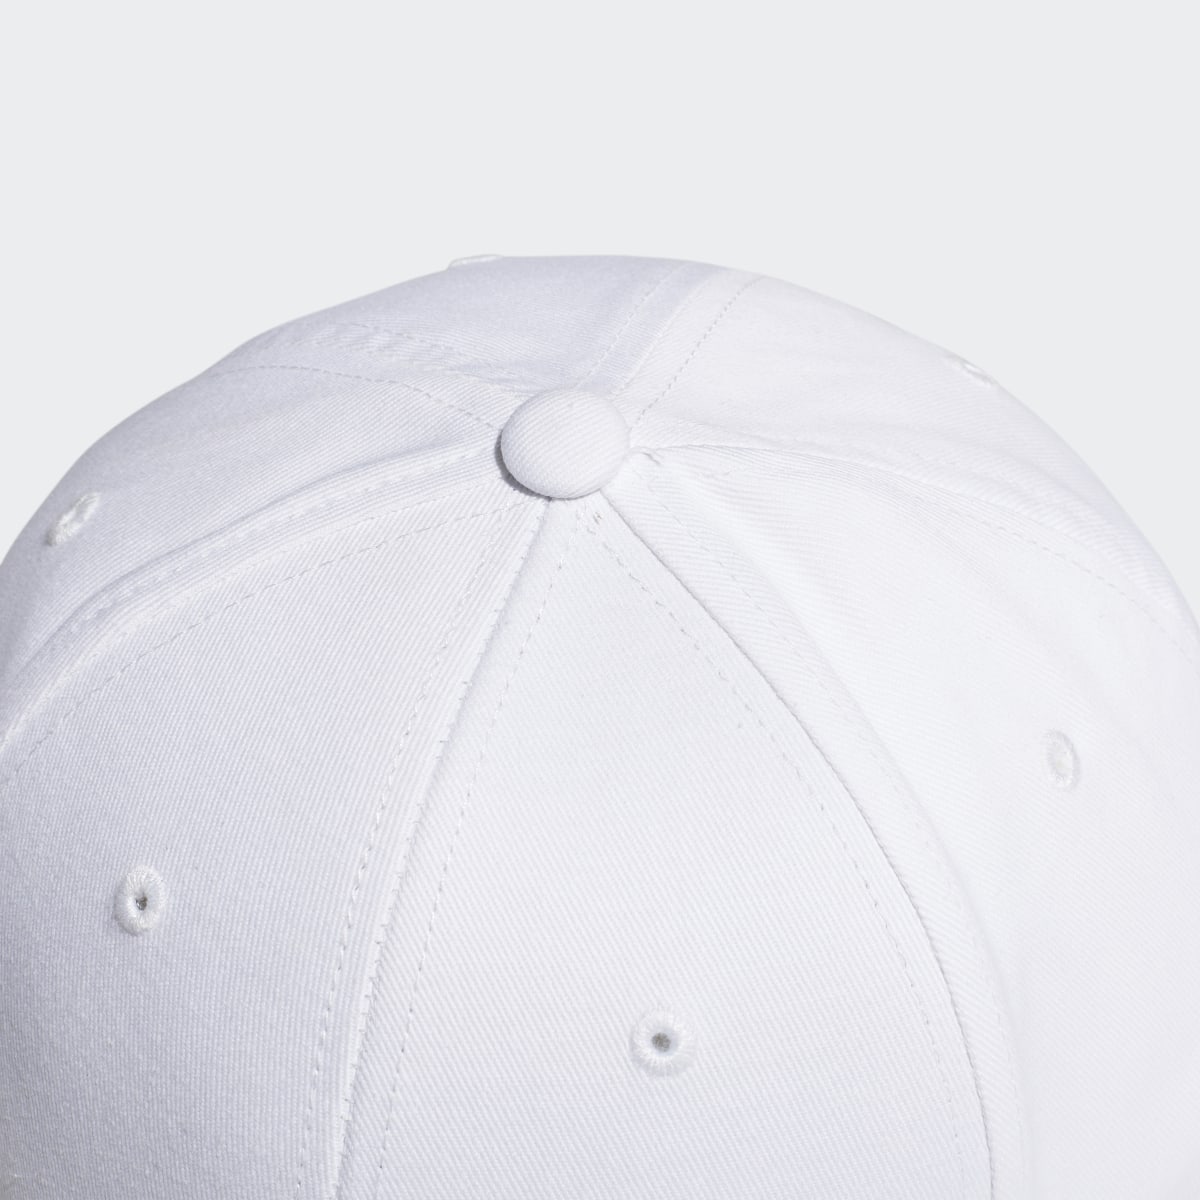 Adidas Baseball Hat. 6